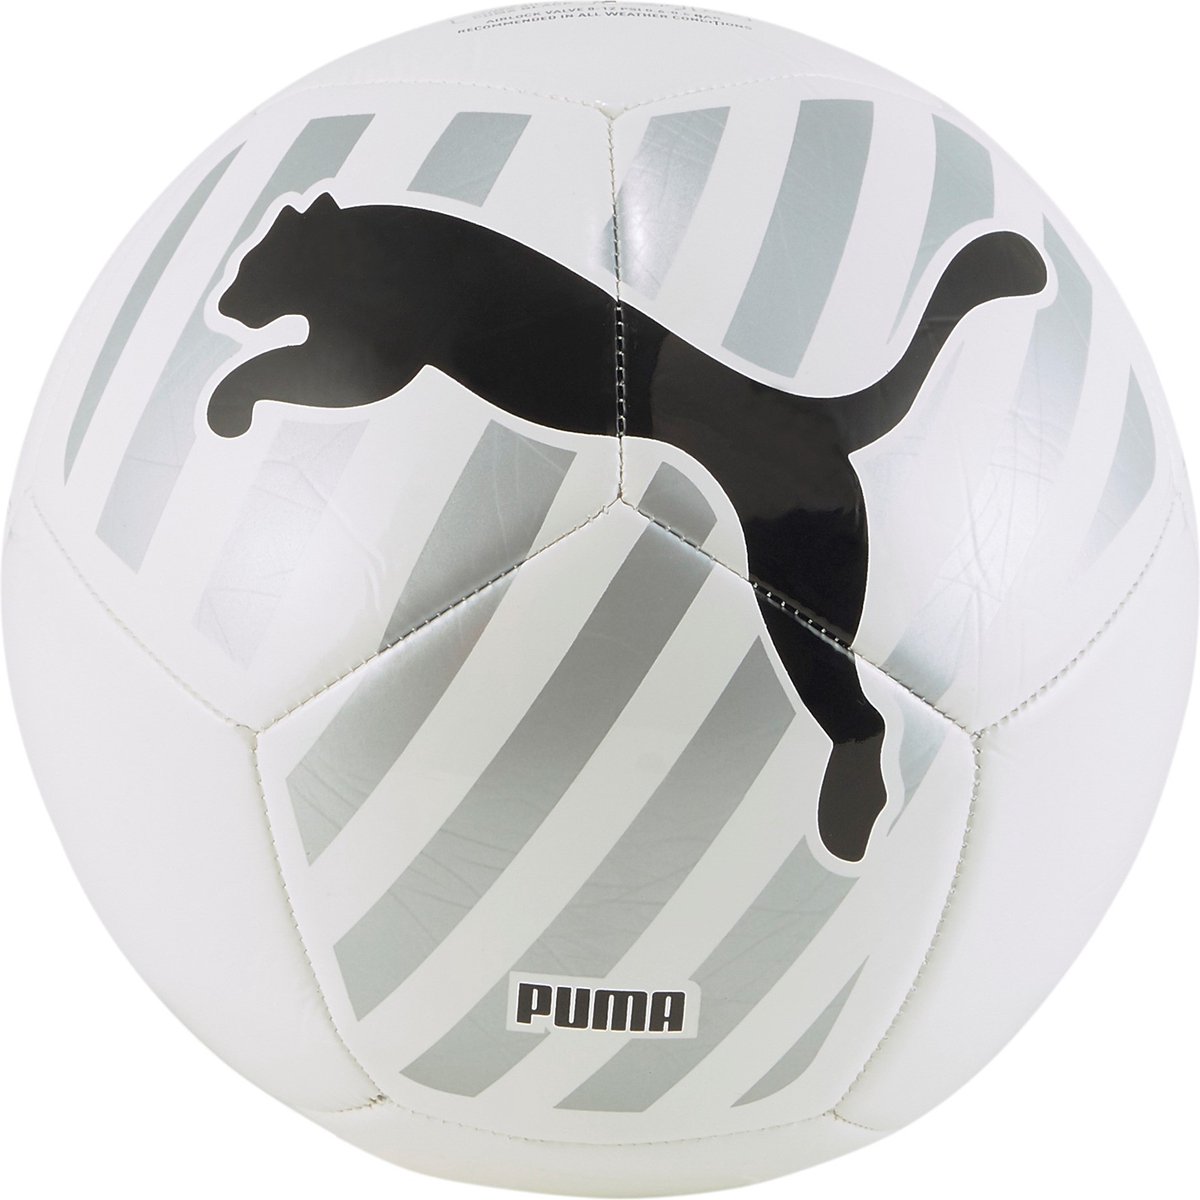 Puma voetbal big cat - maat 3 - wit/grijs